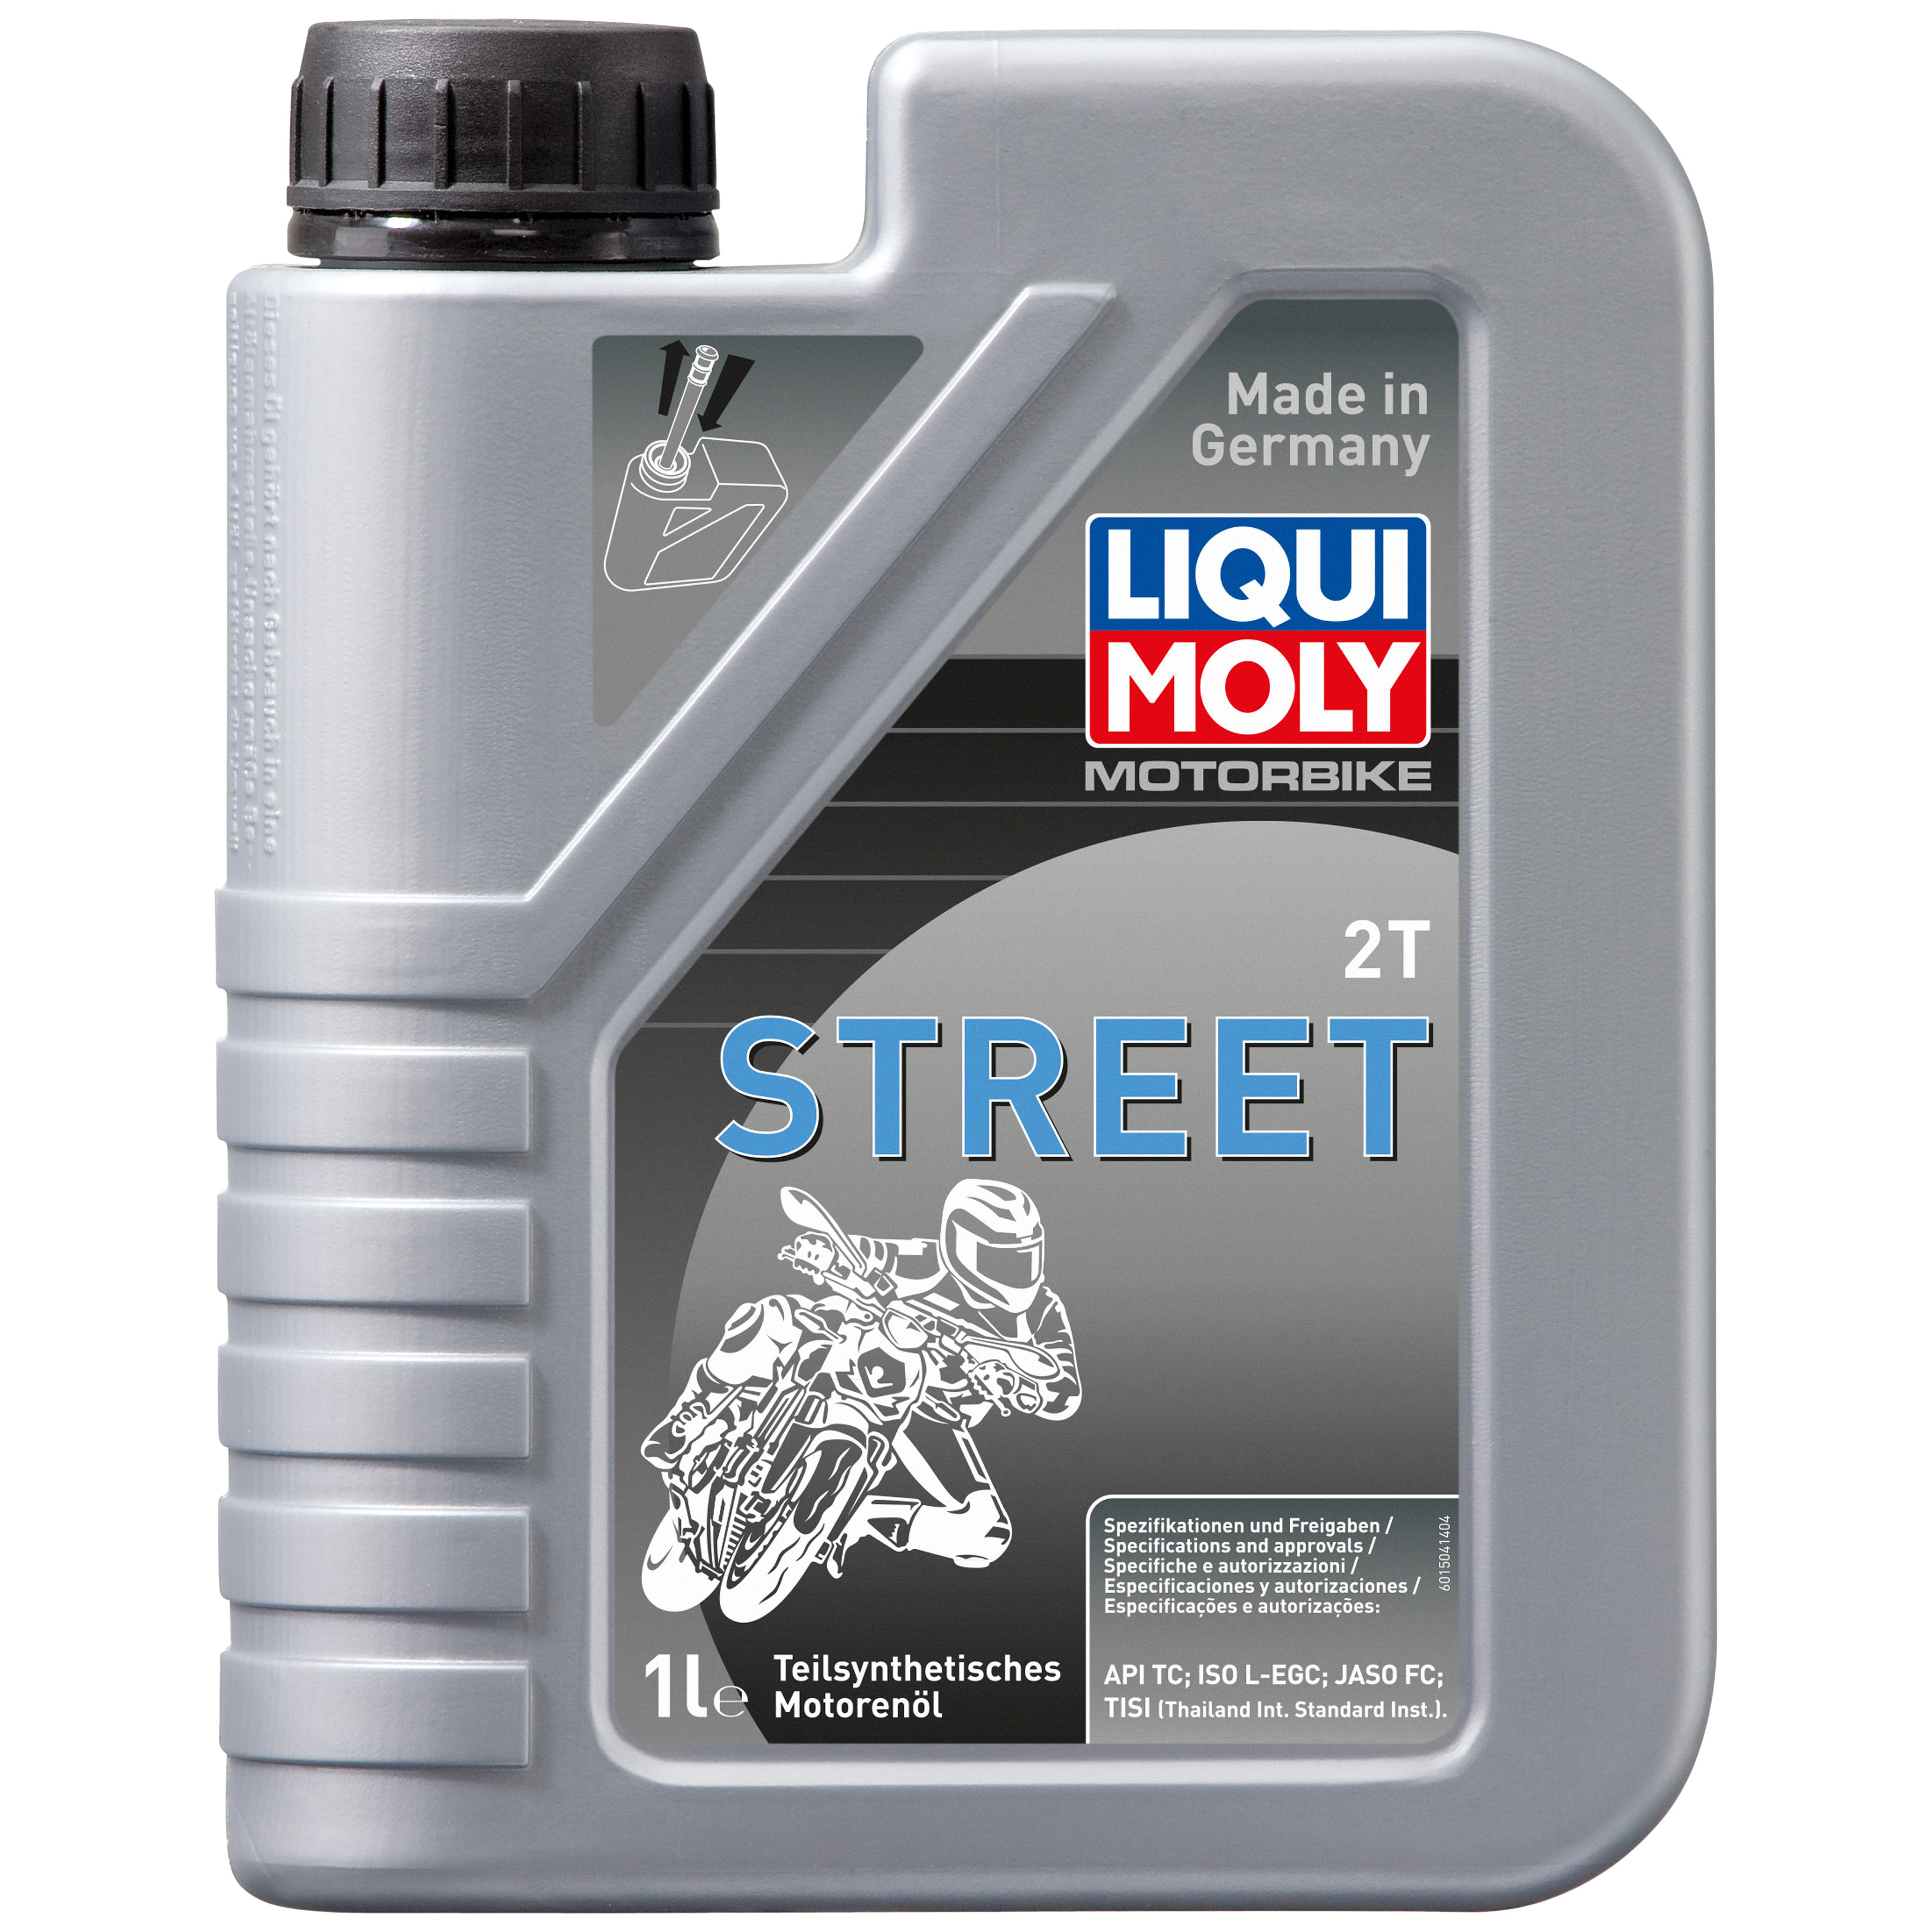 LIQUI MOLY Motorbike 2T Street 1 литр